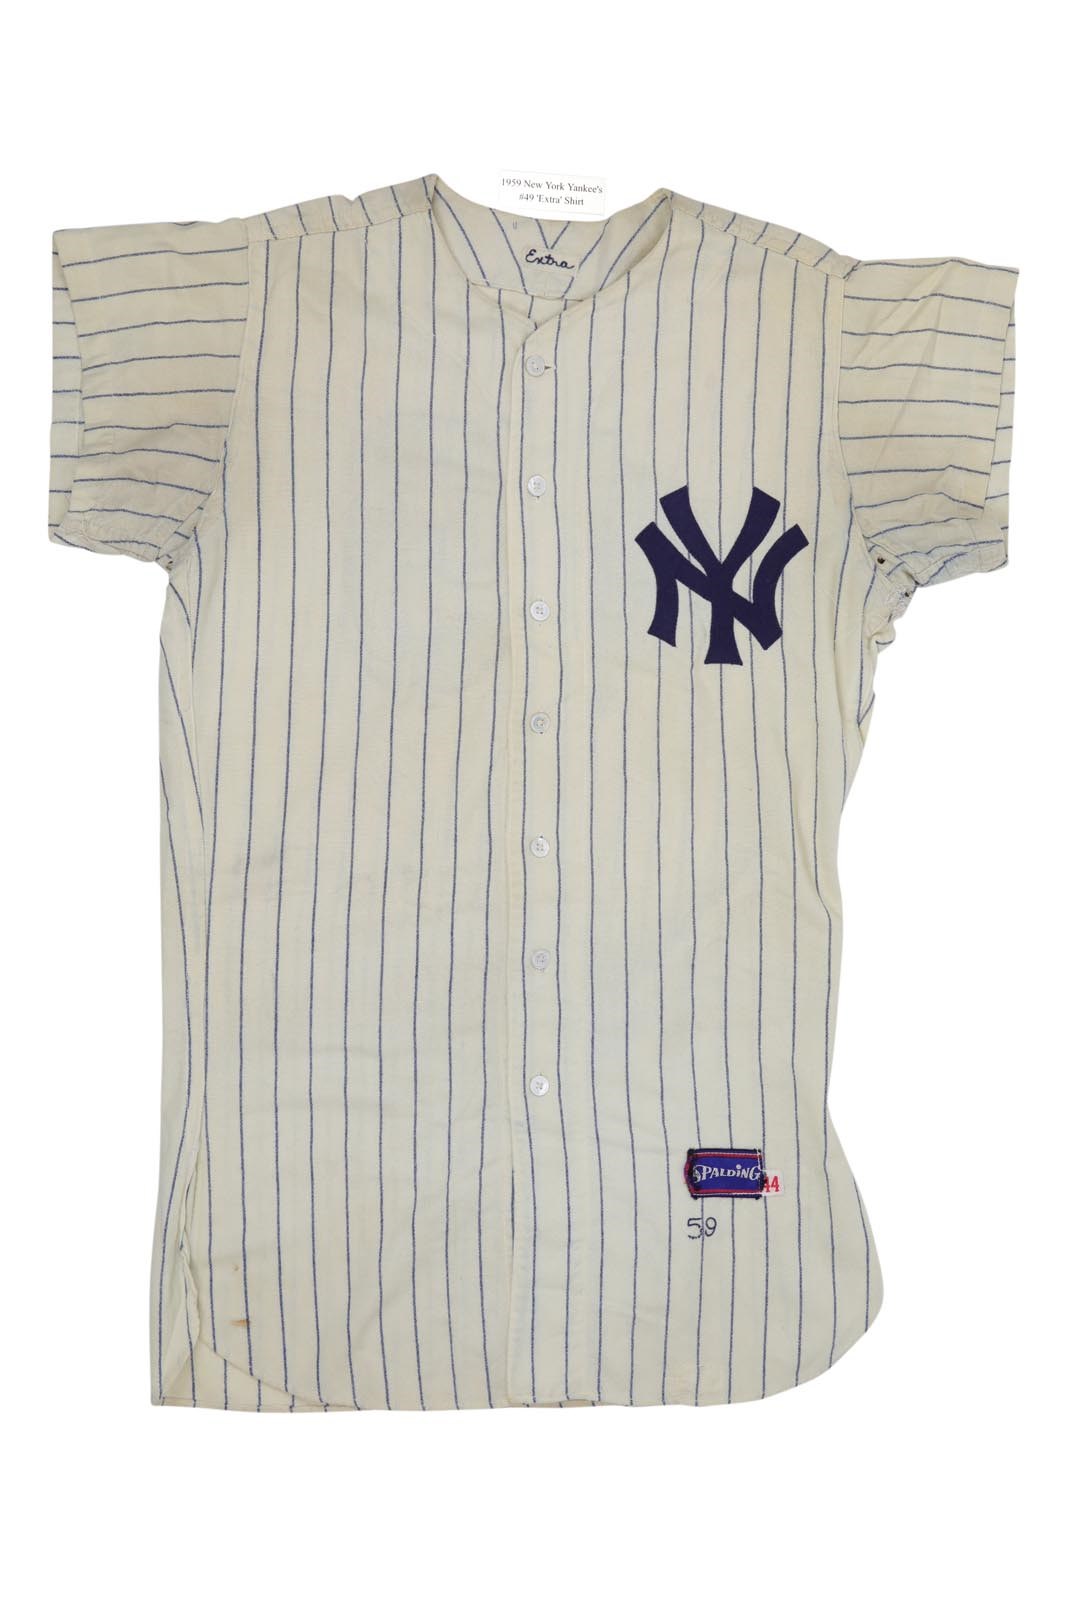 NY Yankees, Giants & Mets - 1959 Jim Bronstad New York Yankees Home Jersey